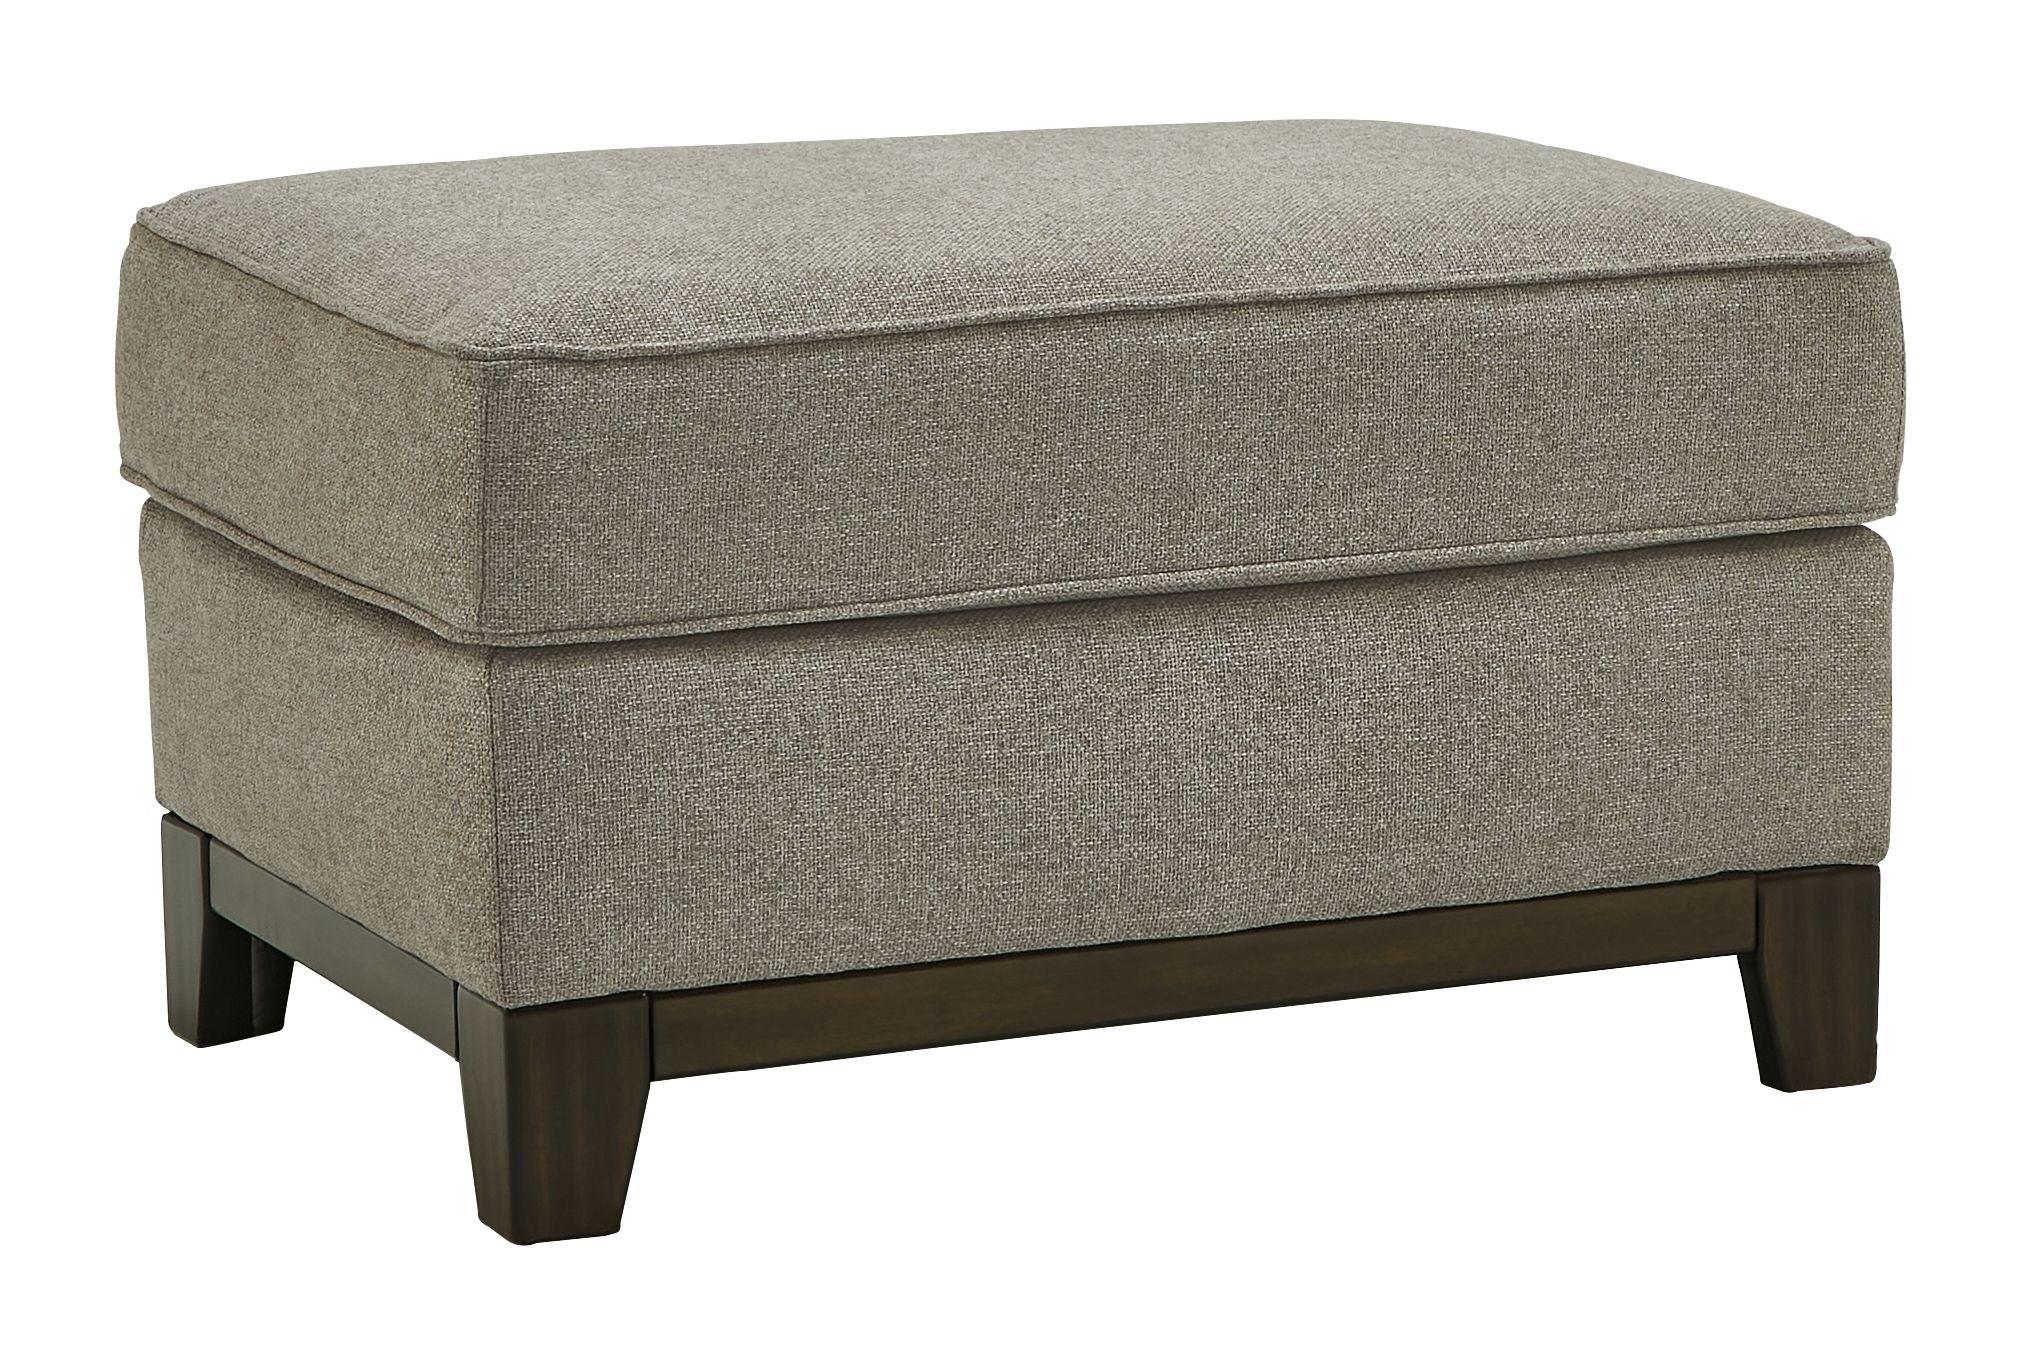 Ashley Furniture - Kaywood - Granite - Ottoman - 5th Avenue Furniture